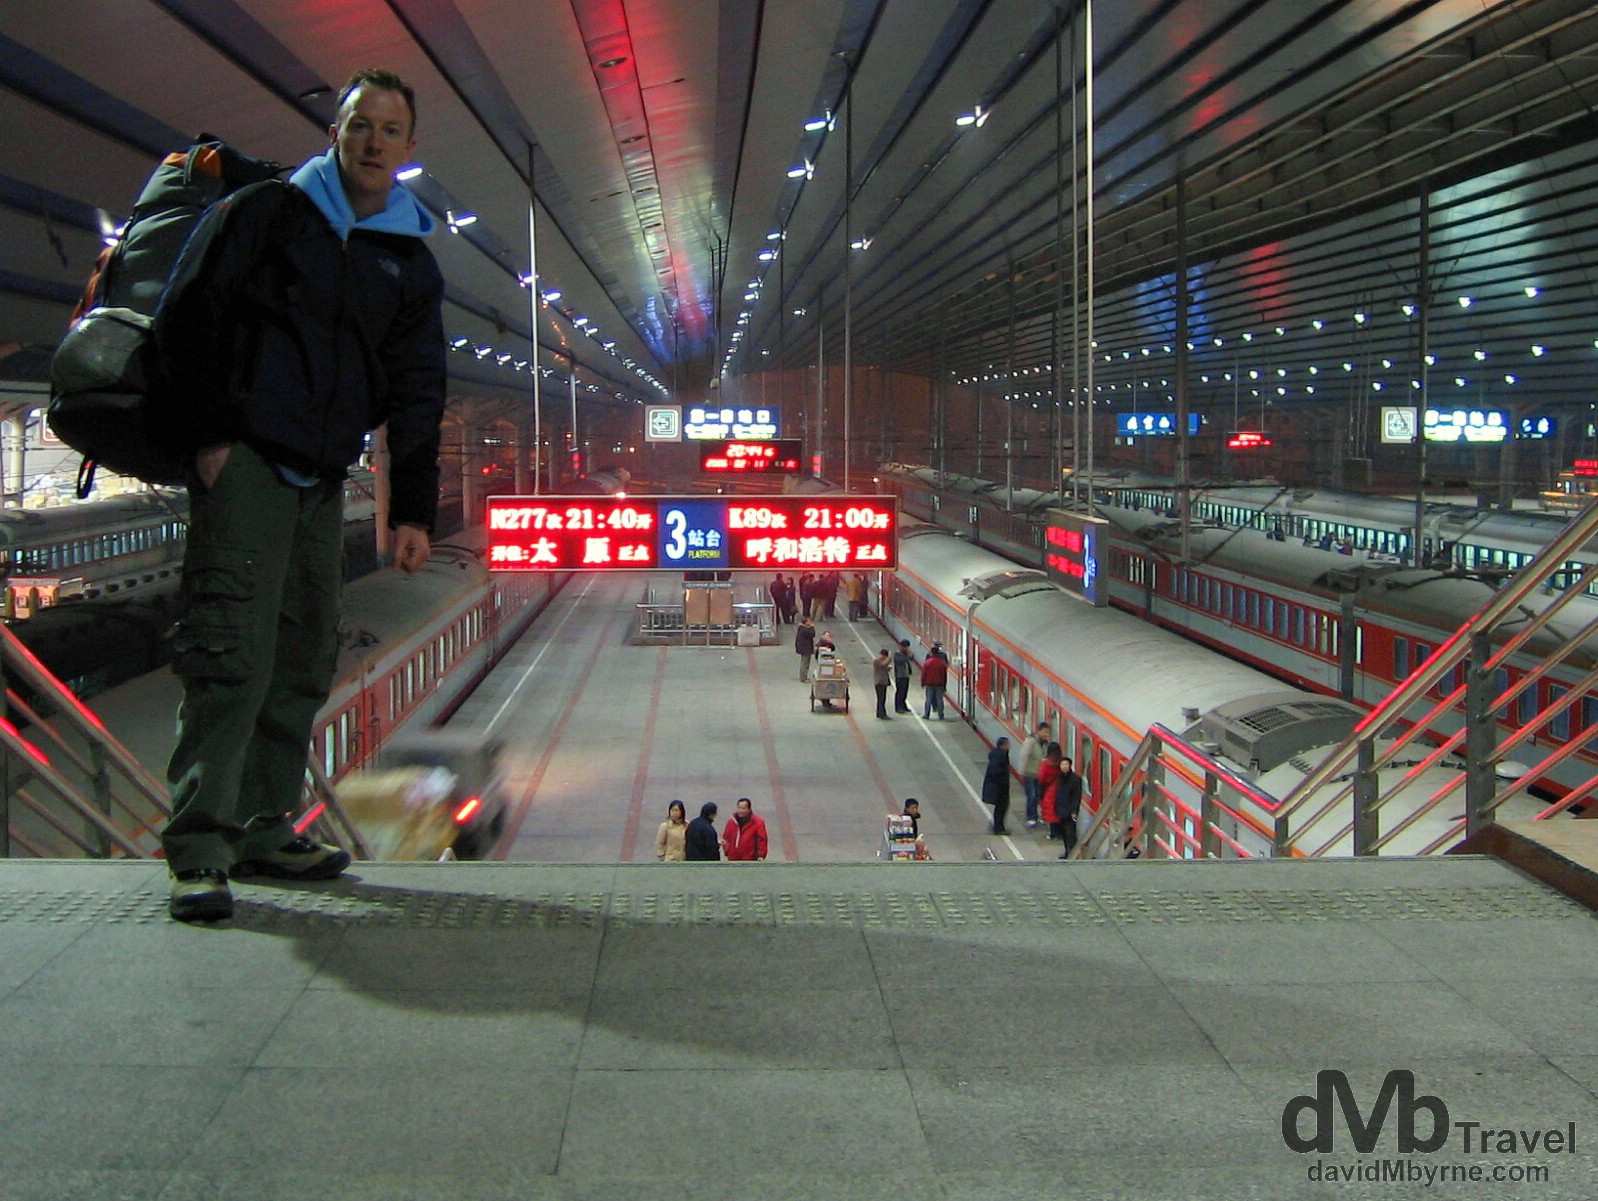 Leaving Beijing for Hohhot in Chinese Inner Mongolia. Beijing West Train Station, Beijing, China. February 11, 2006